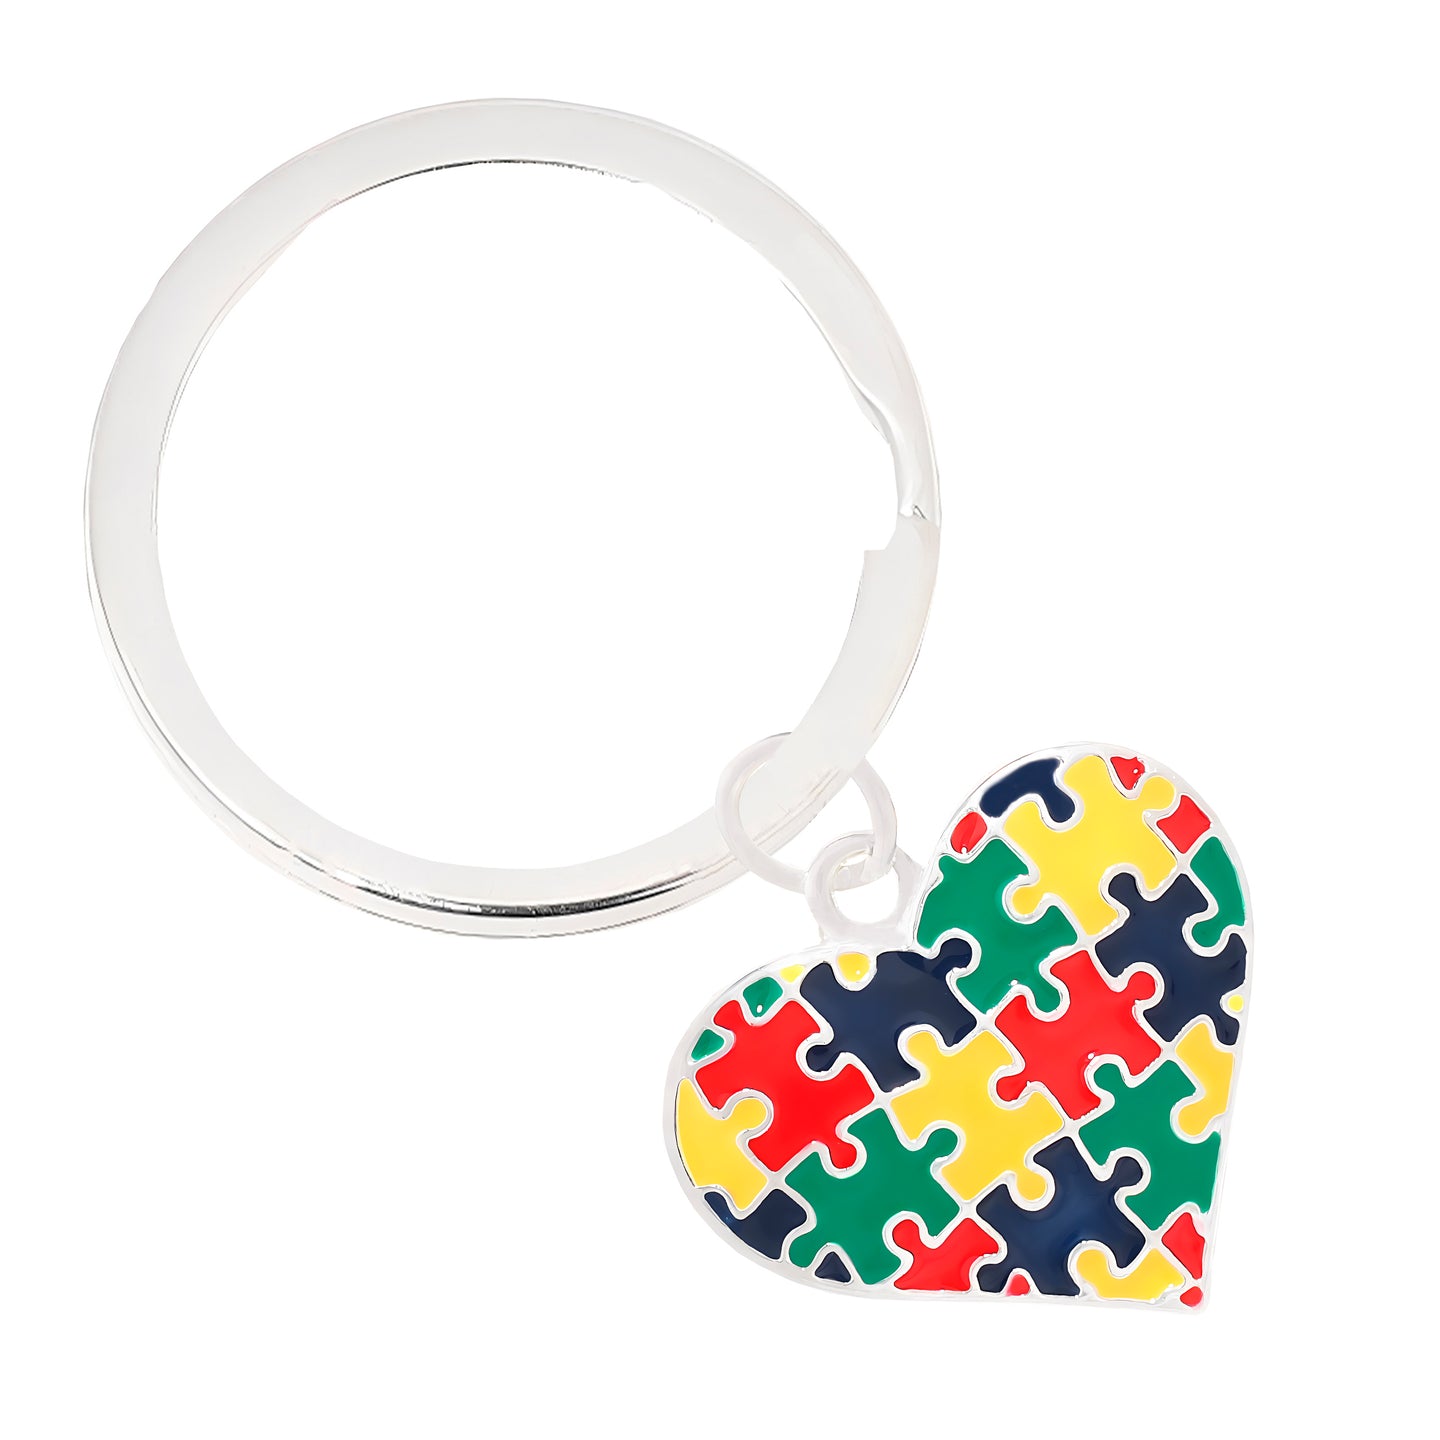 Multicolored Puzzle Piece Heart Split Style Key Chains